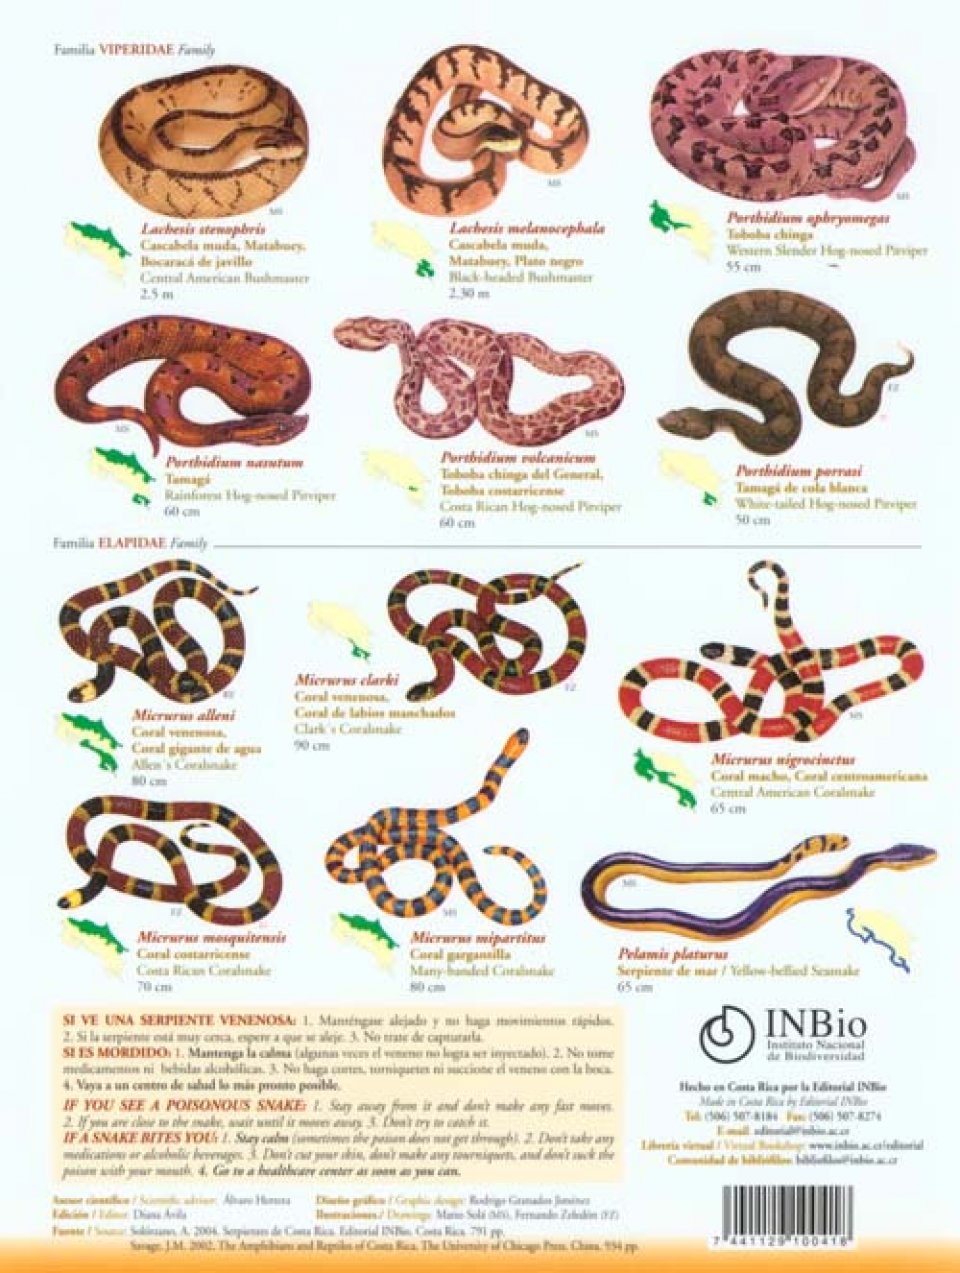 Poisonous Snakes of Costa Rica / Serpientes Venenosas de Costa Rica ...